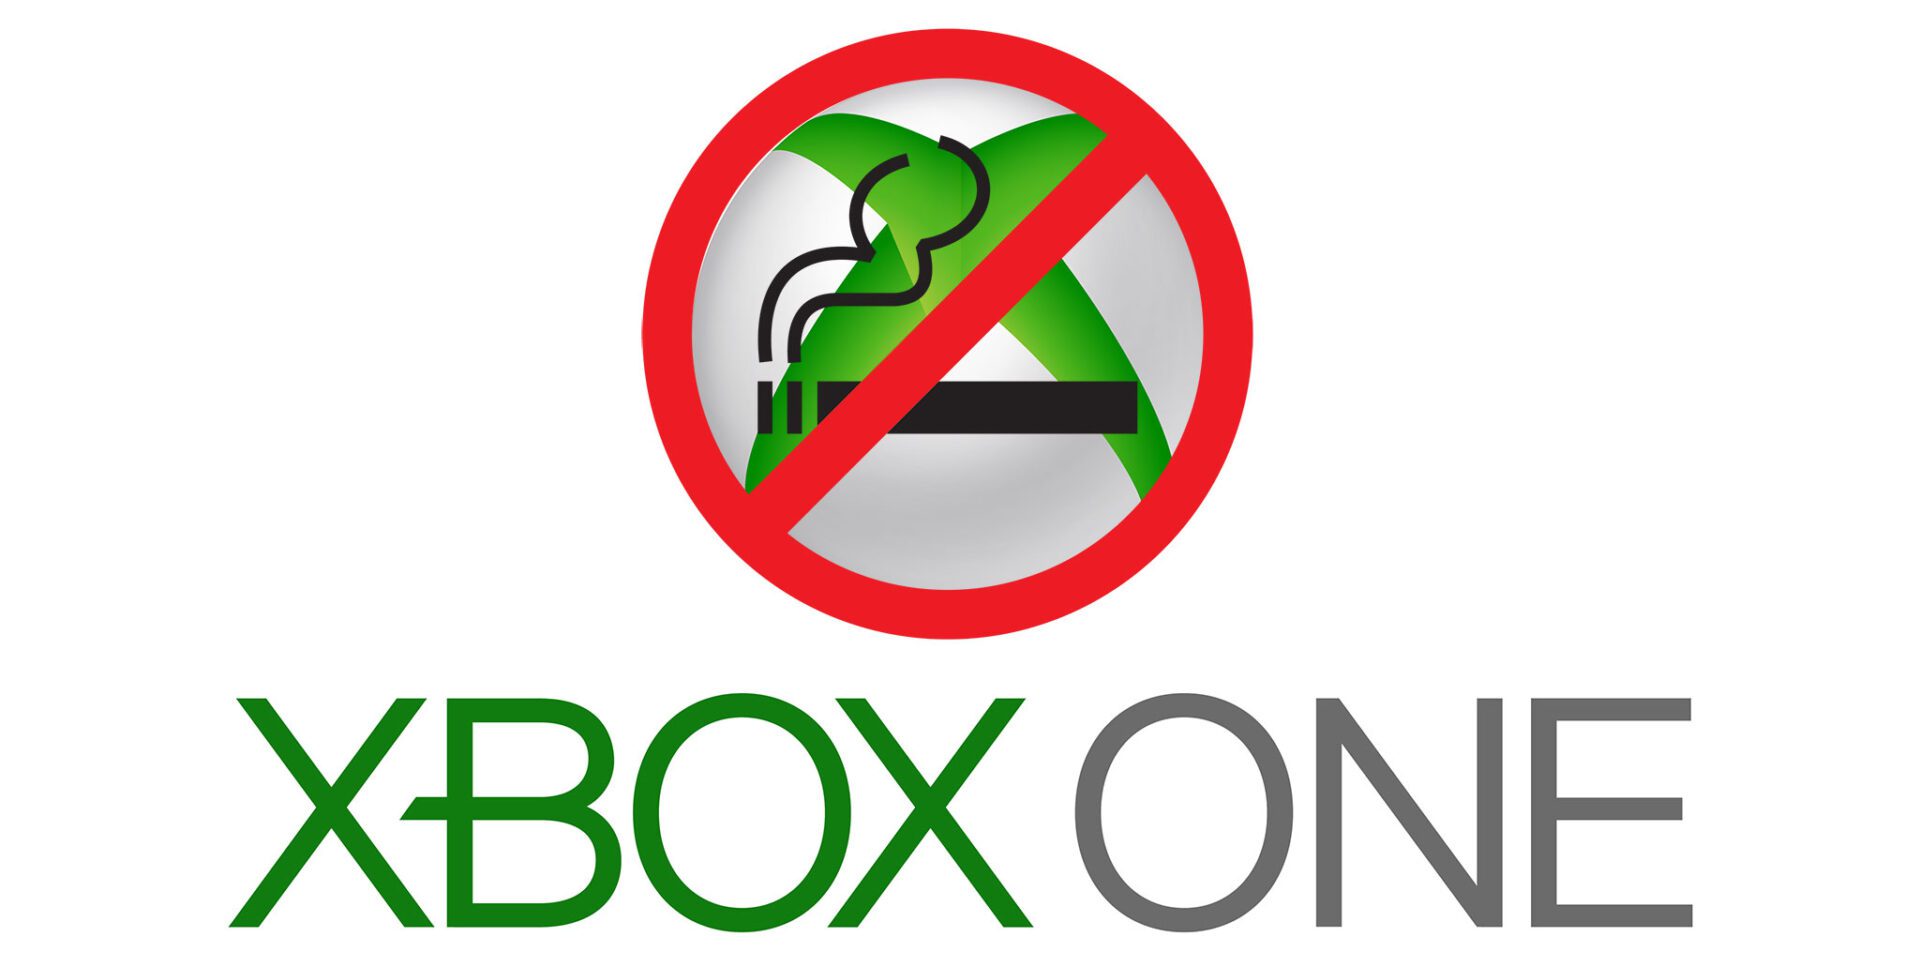 Xbox One Con Problemas De “Tabaquismo” (vídeo)